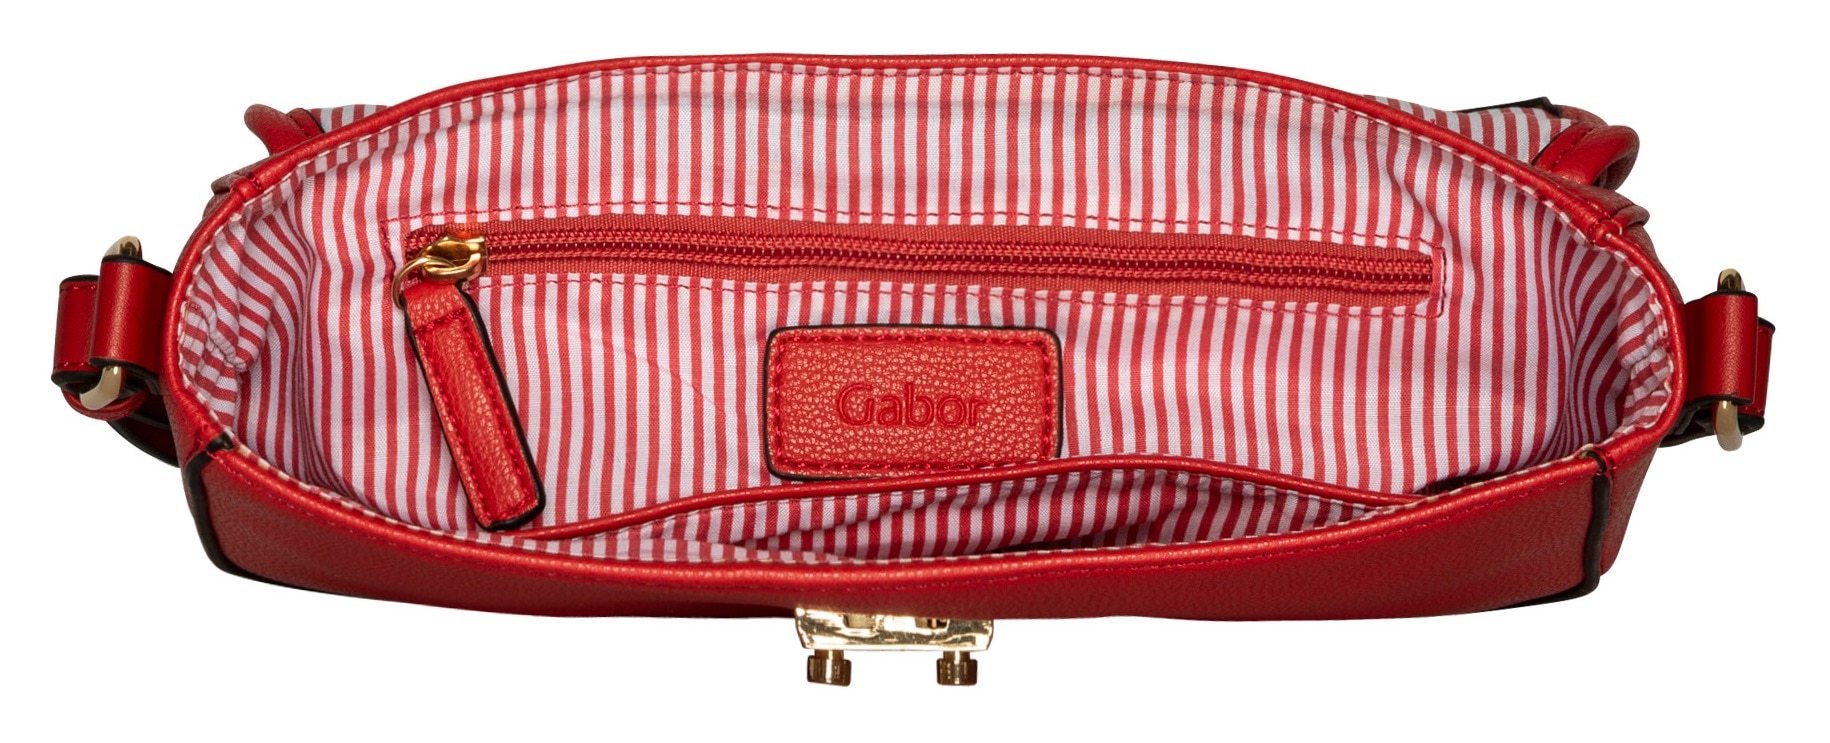 Gabor Umhängetasche »ANETA Baguette bag«, mit goldenem Verschluss